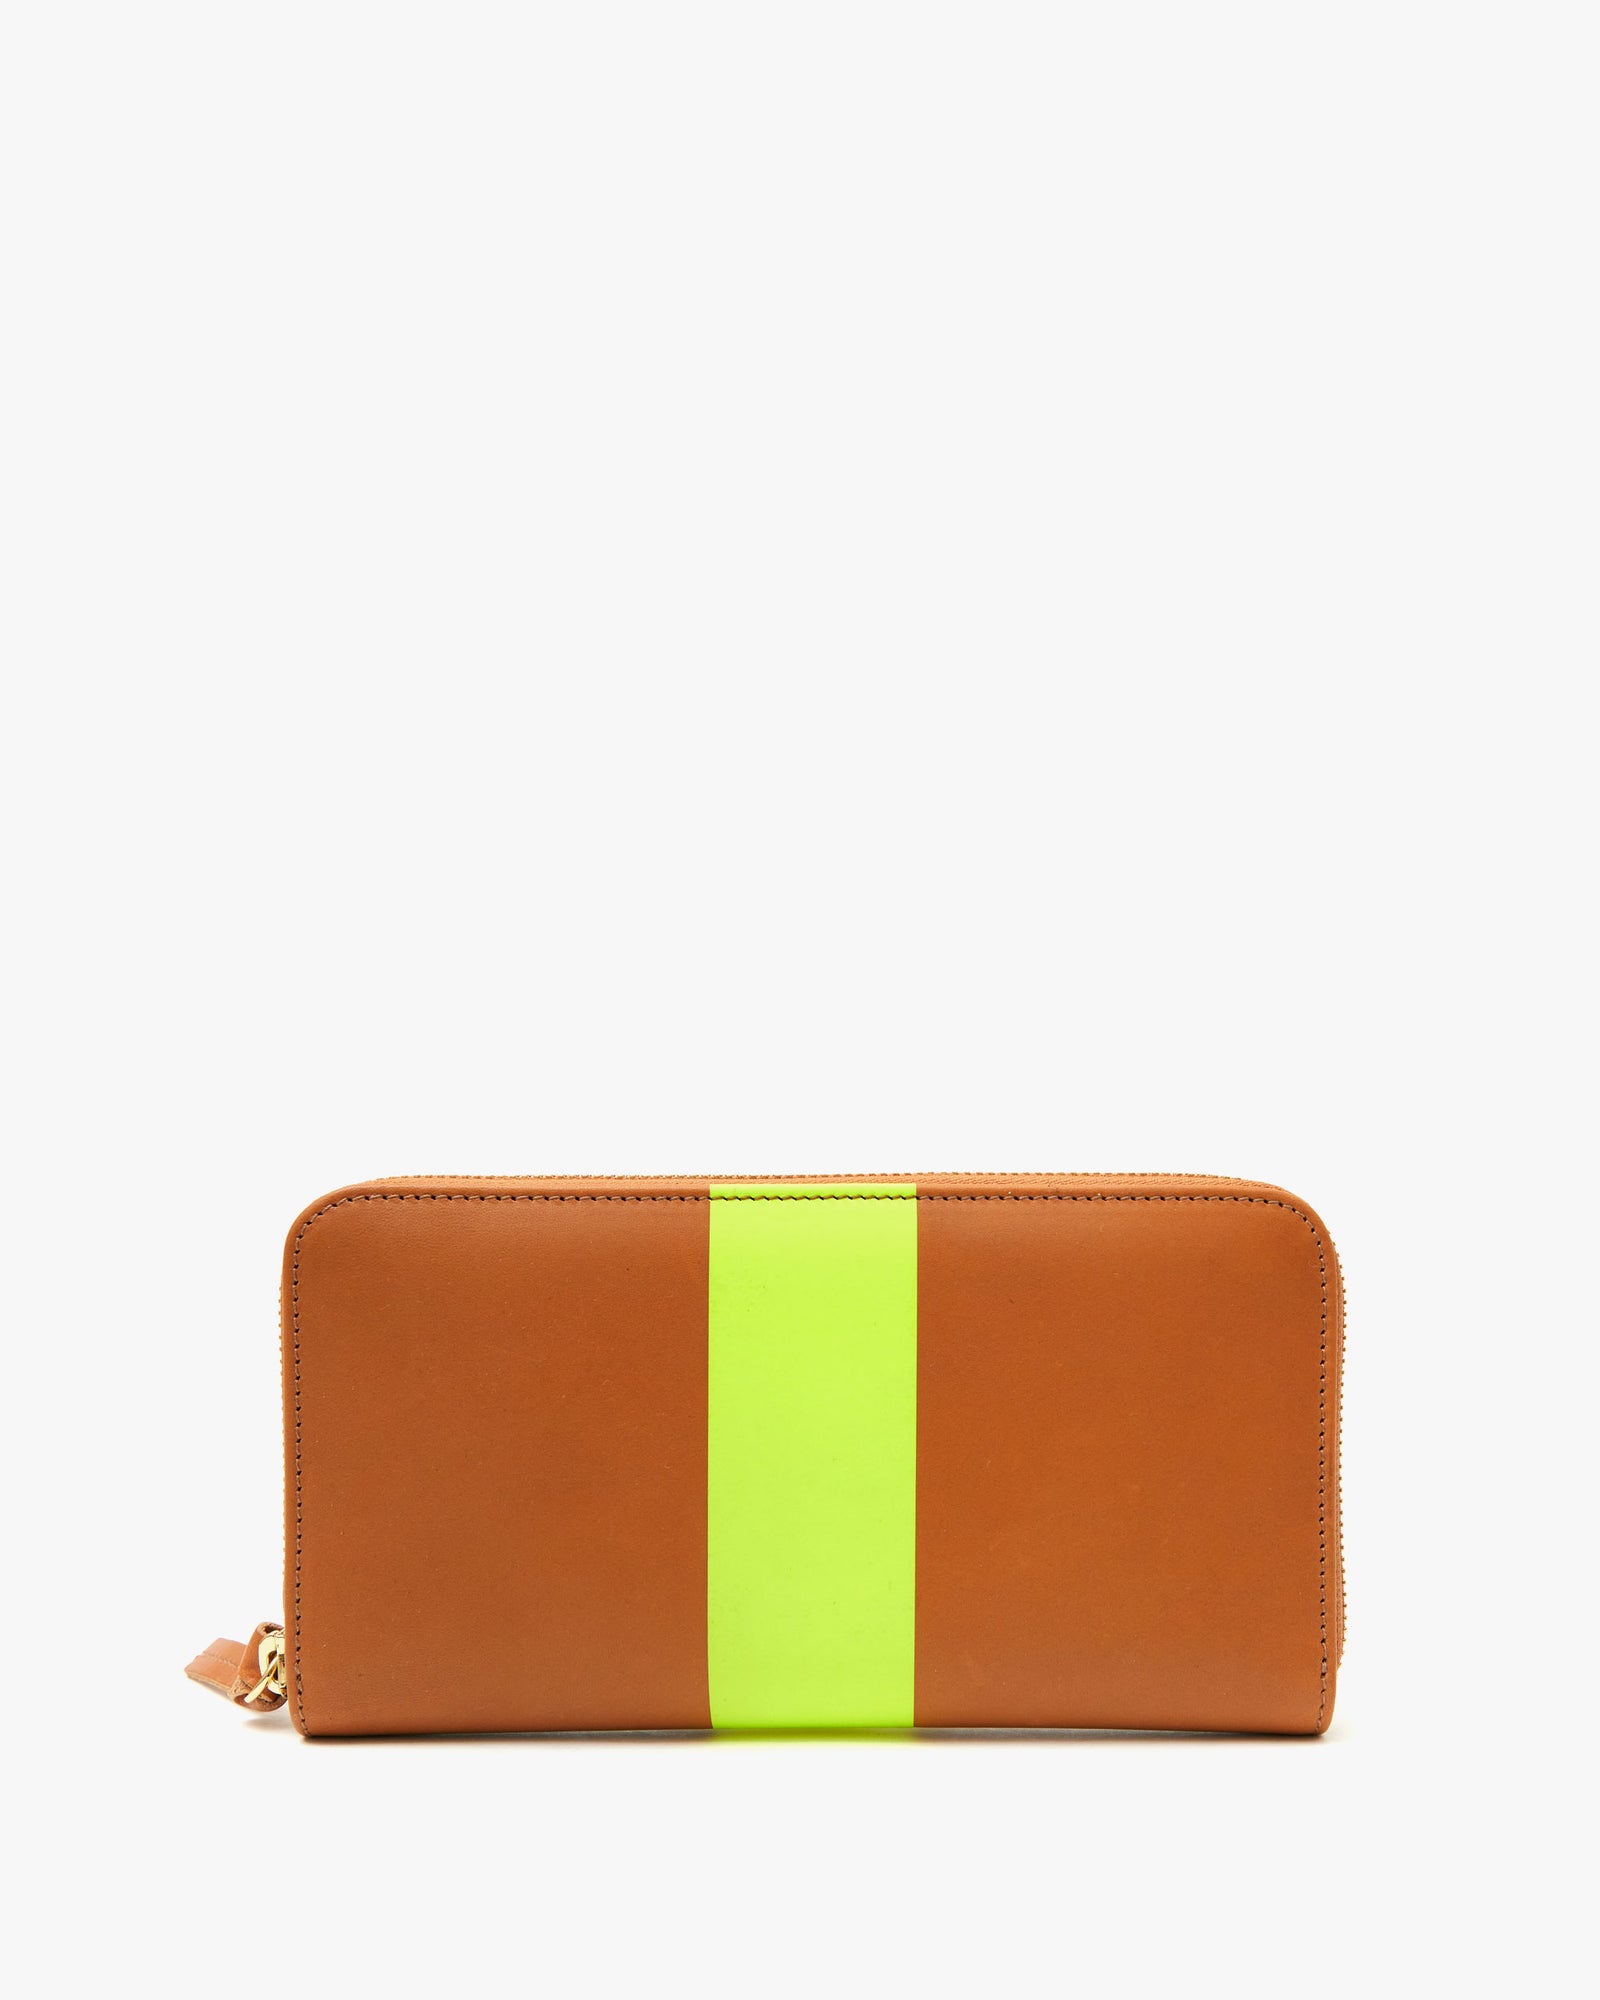 Cuoio w/ Neon Yellow Stripe Zip Wallet